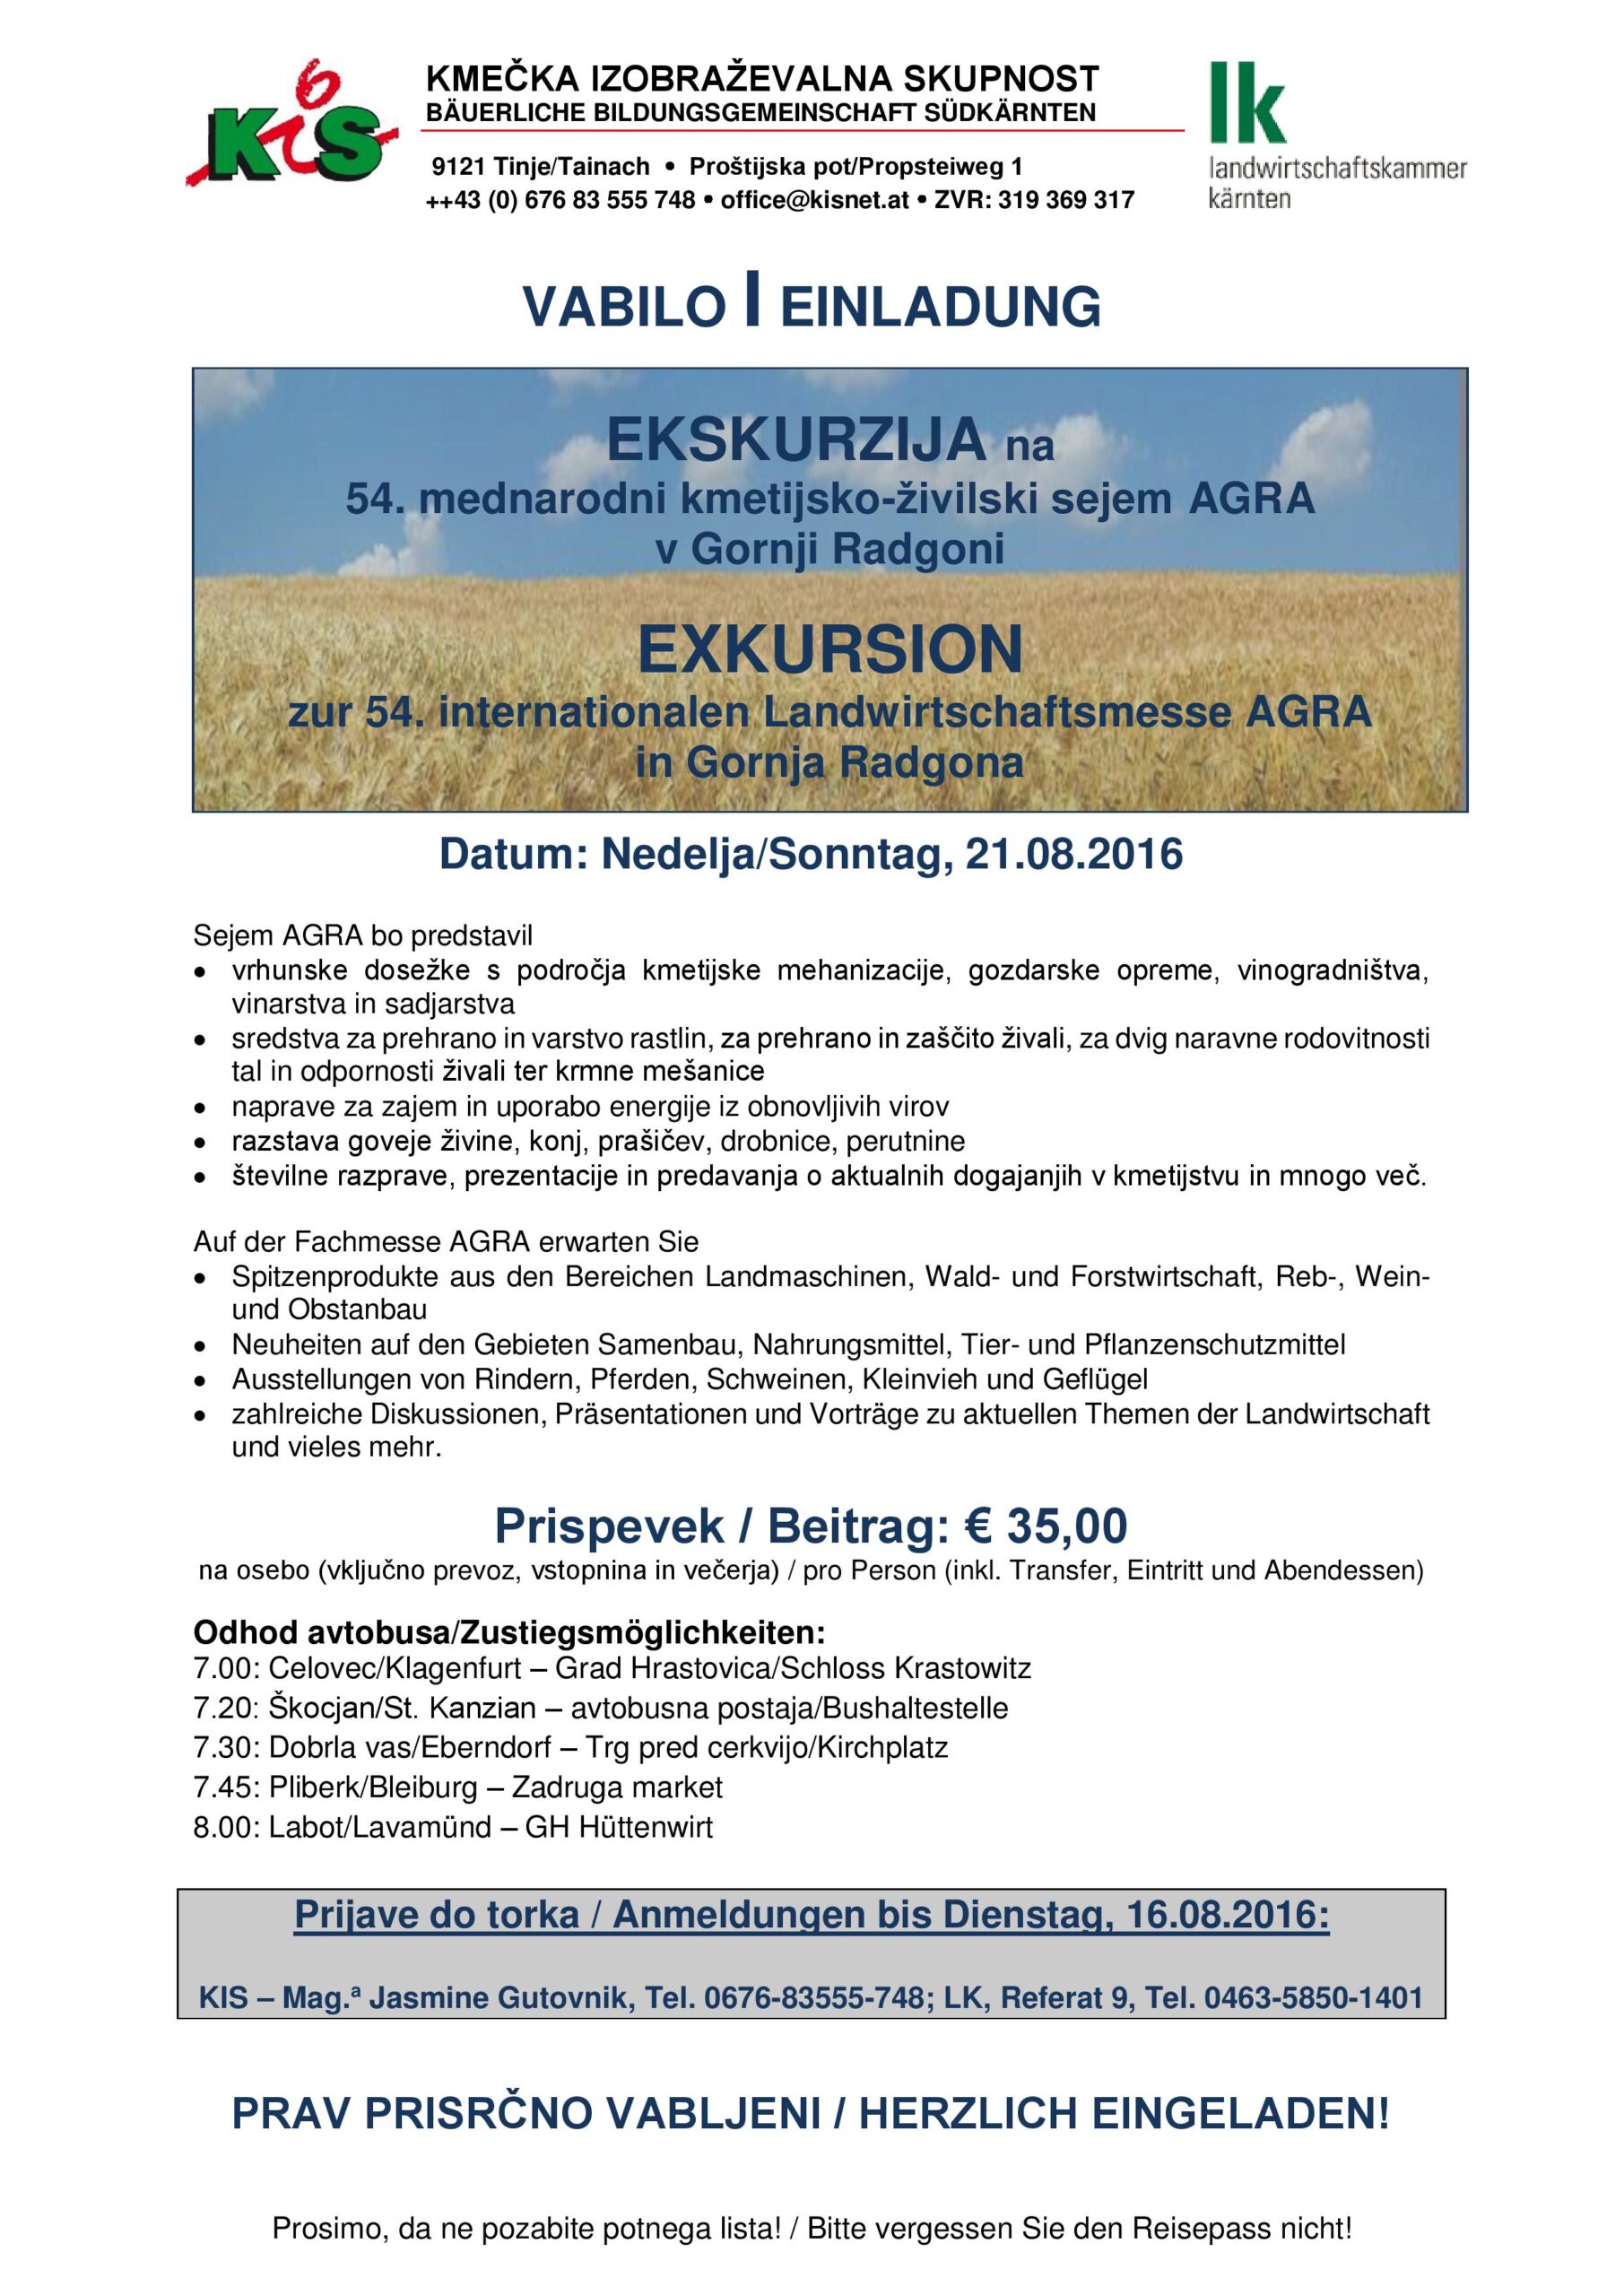 2016 Einladung zur Exkursion_Vabilo ekskurzija_Messe_sejem AGRA_Gornja R...(1)